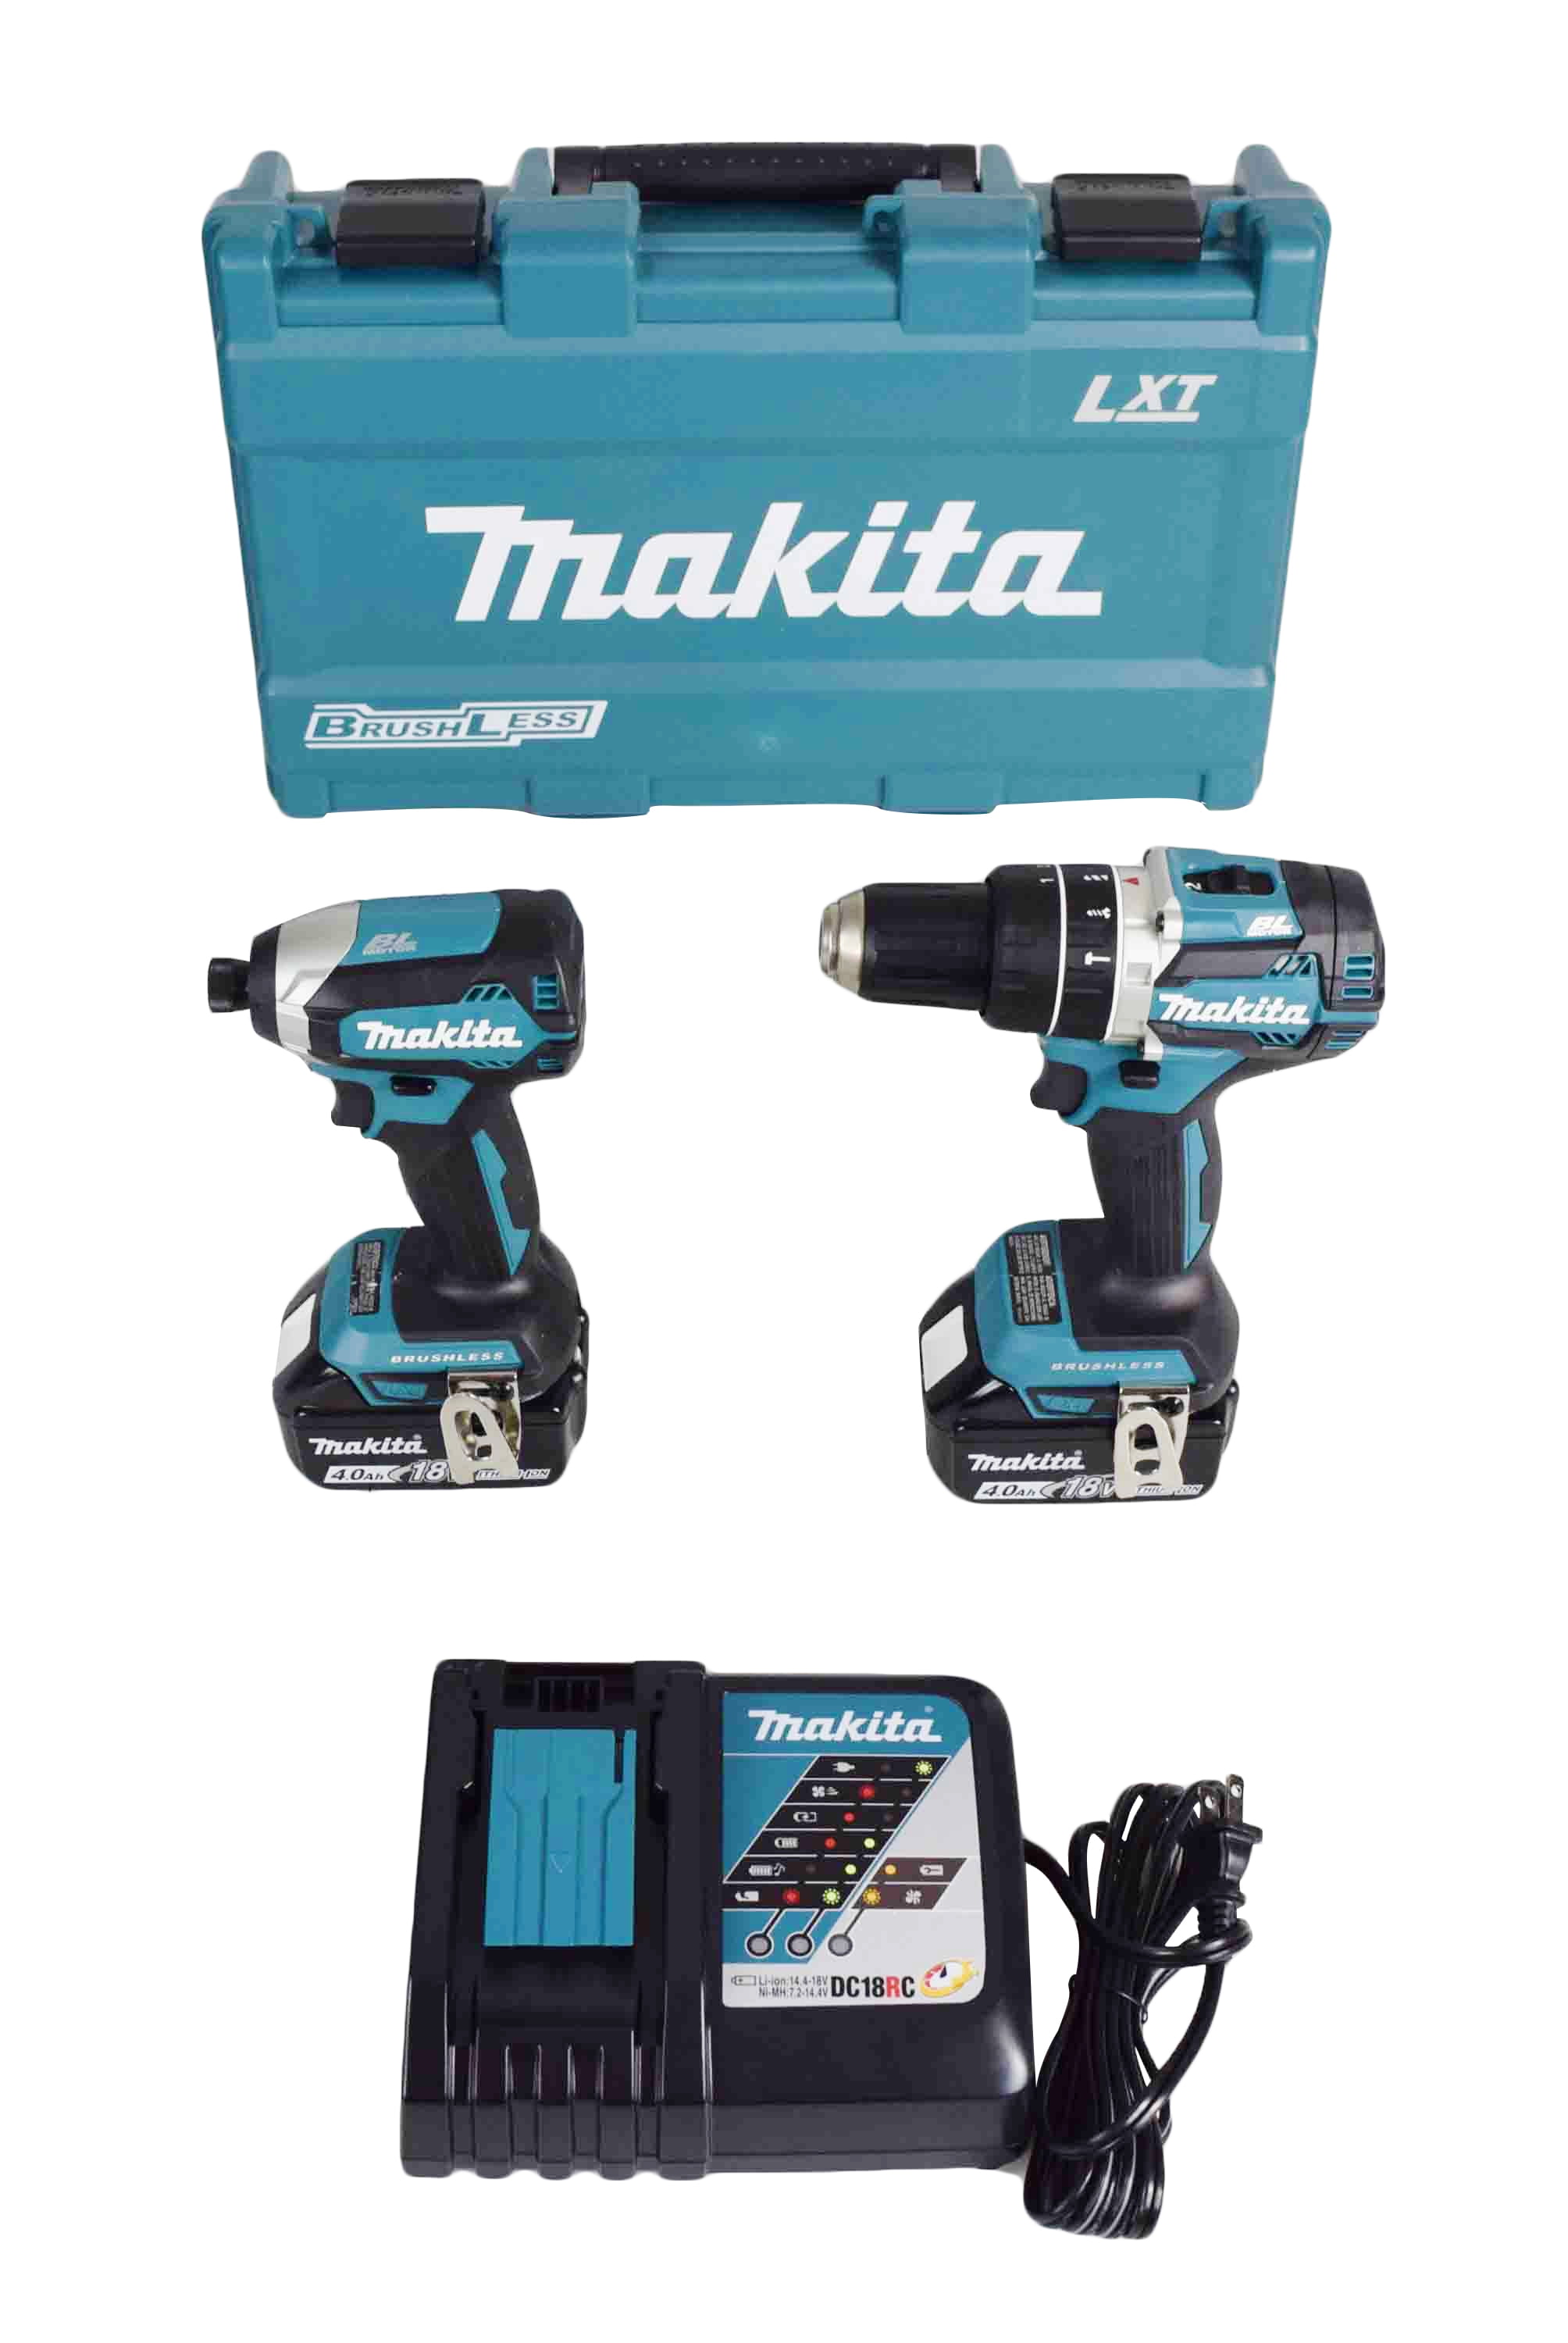 Makita Tools Sticker Car Hammer Saw Drill Impact Combo Kit Drill Brushless 18V R